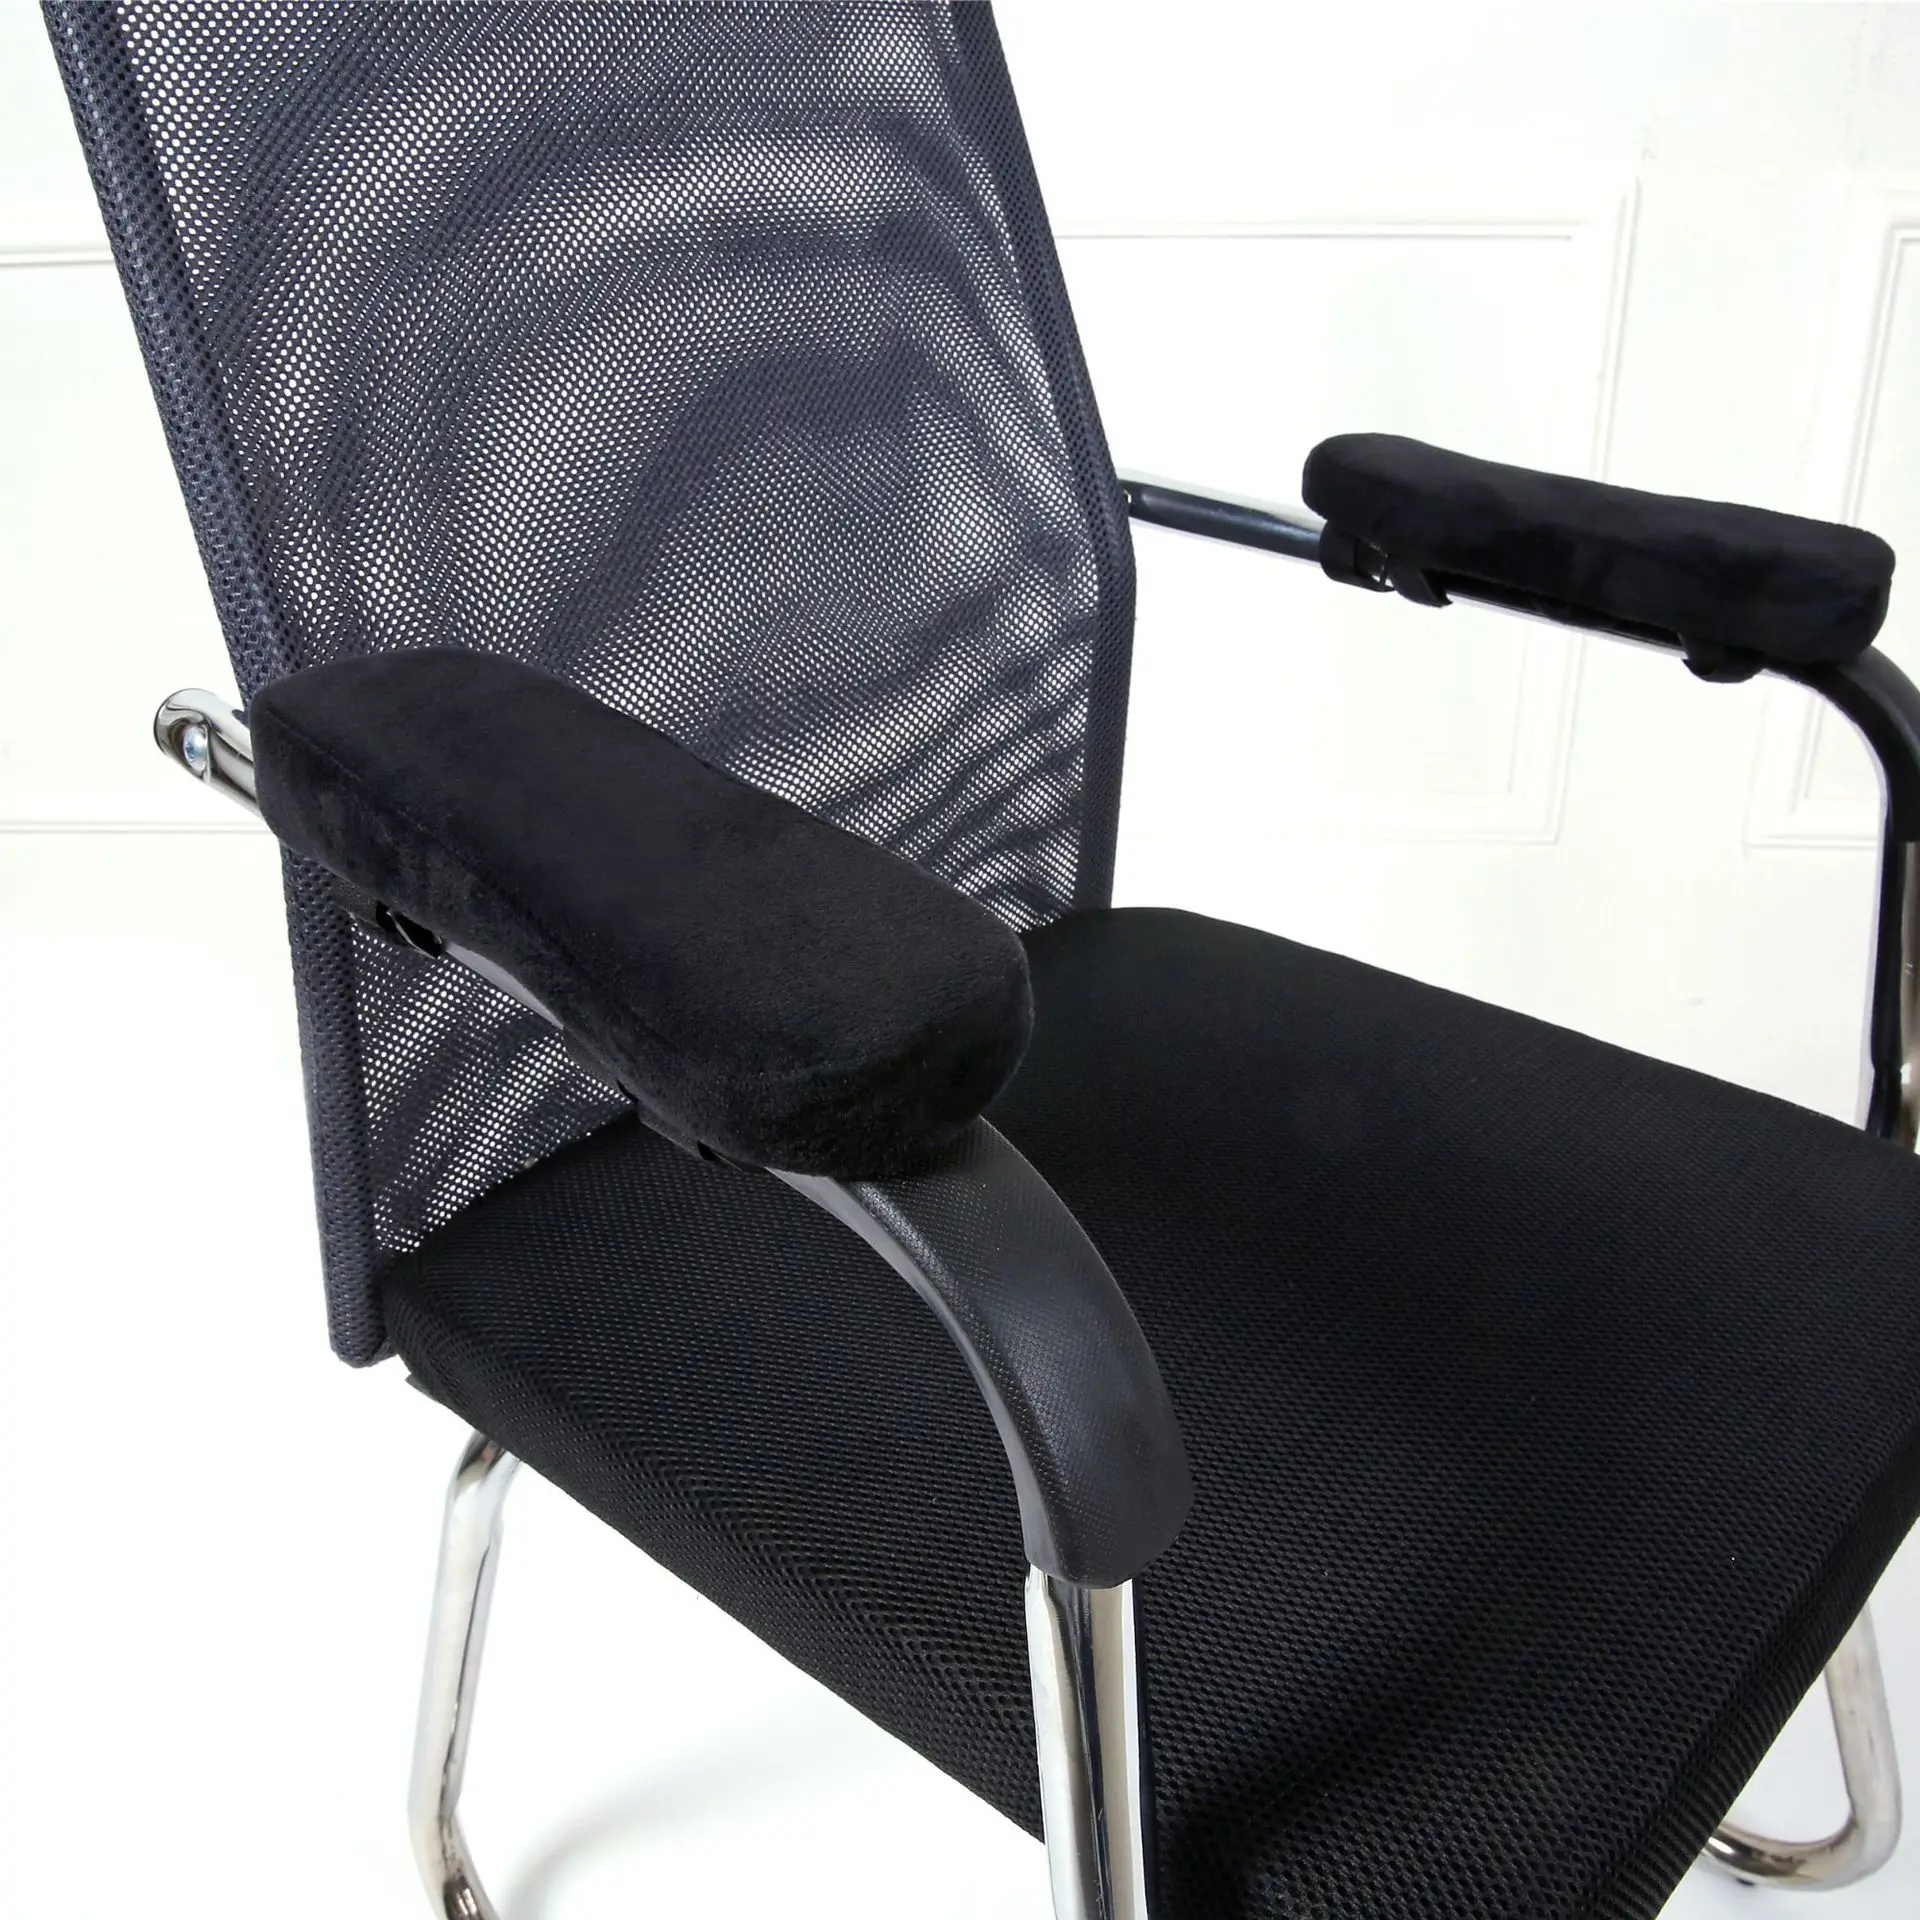 Non-slip Gel Chair Cushion Confort Massage Car office Seat Cushion Chair Armrest Pads Chairs Rest Cushion navy cushions